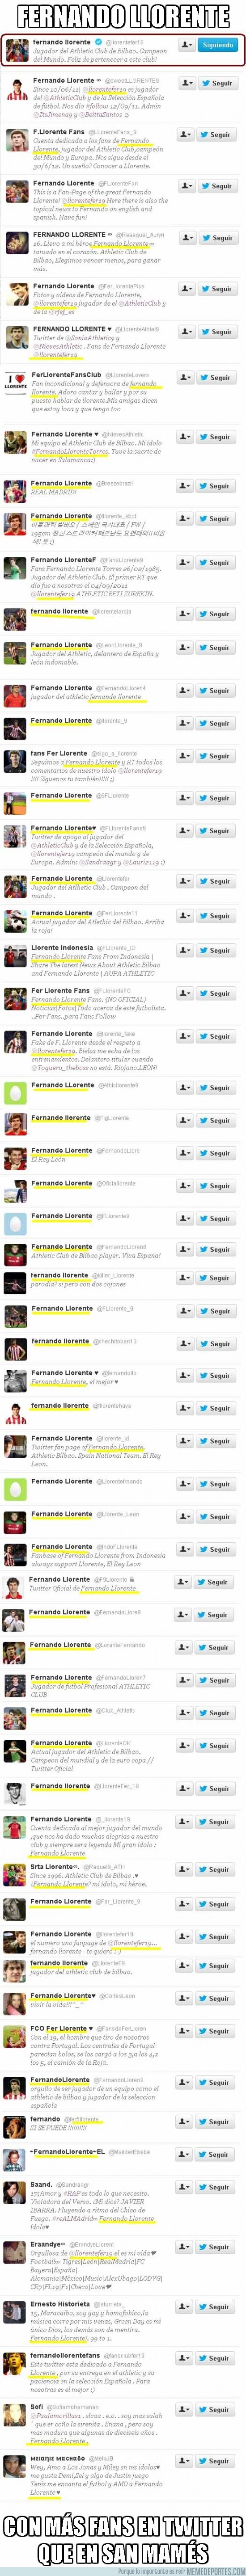 58556 - Fernando Llorente, un crack en twitter